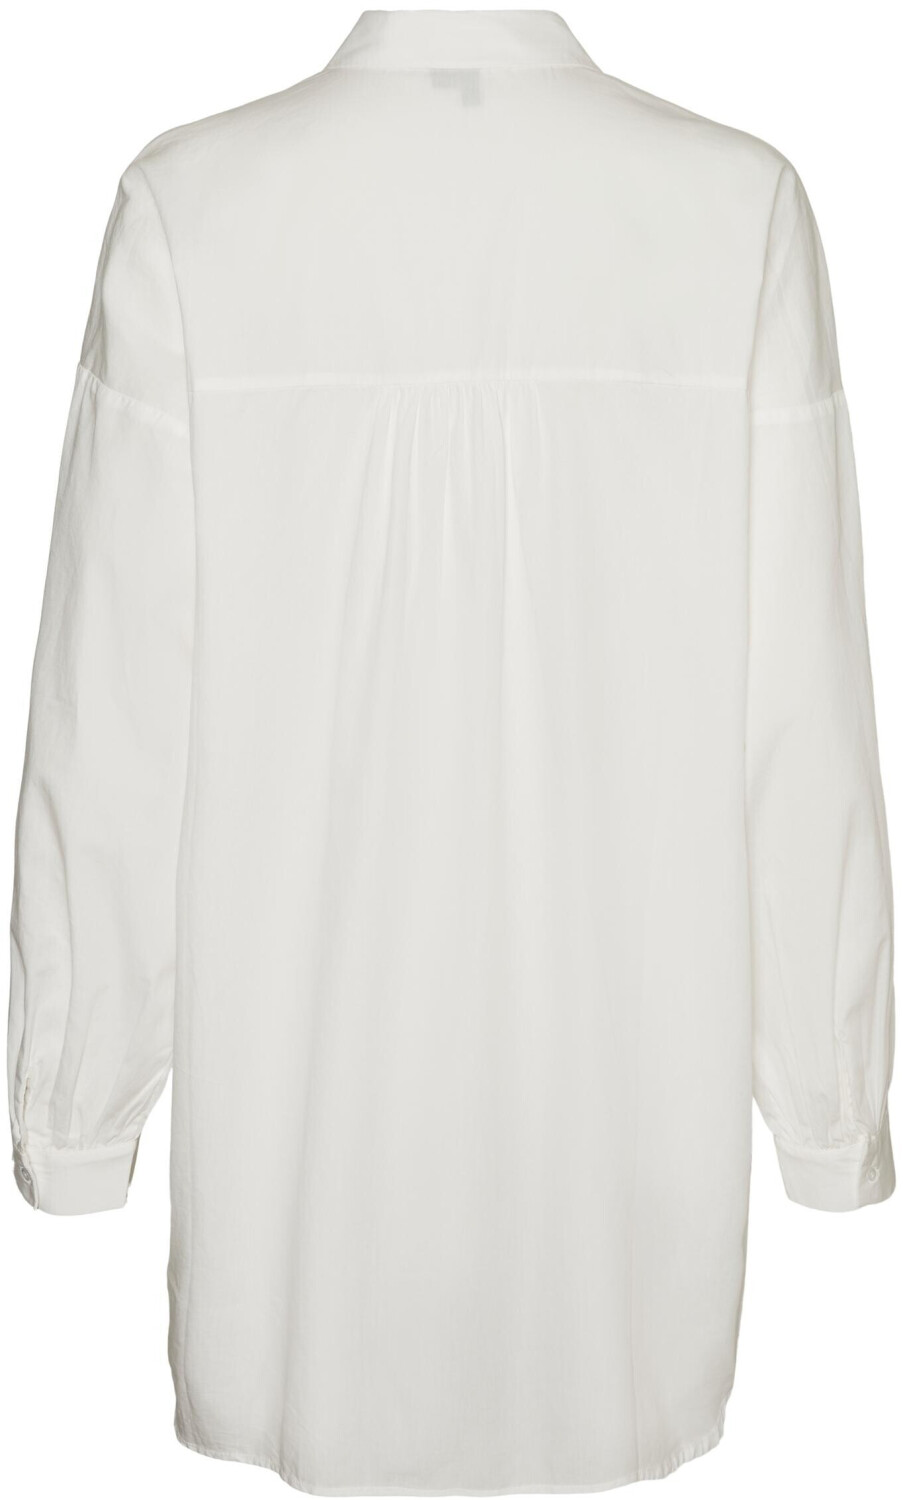 snow white bei € Shirt (10250576) L/s Moda Oversize | 15,99 Vero Preisvergleich ab Vmbina Ga Noos